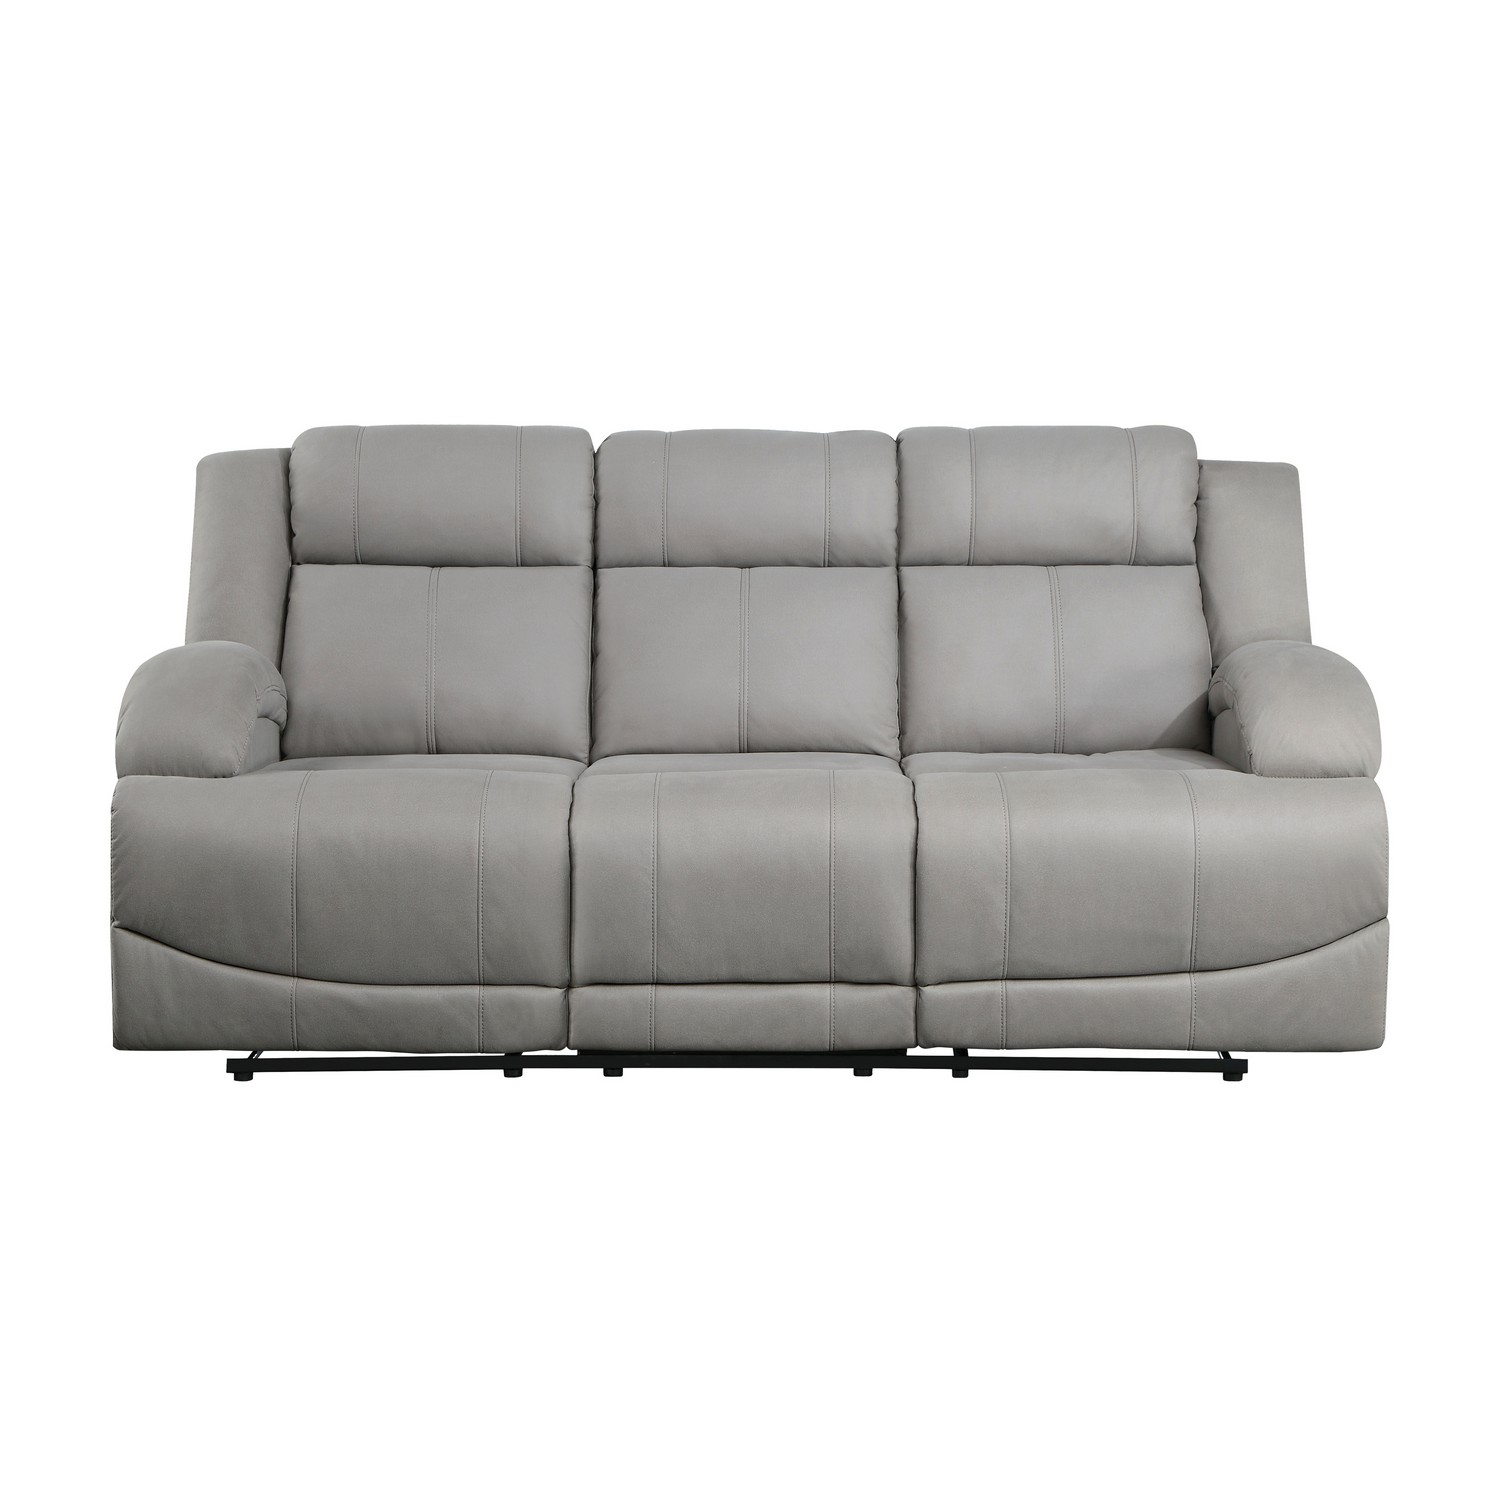 Homelegance Camryn Double Reclining Sofa - Gray